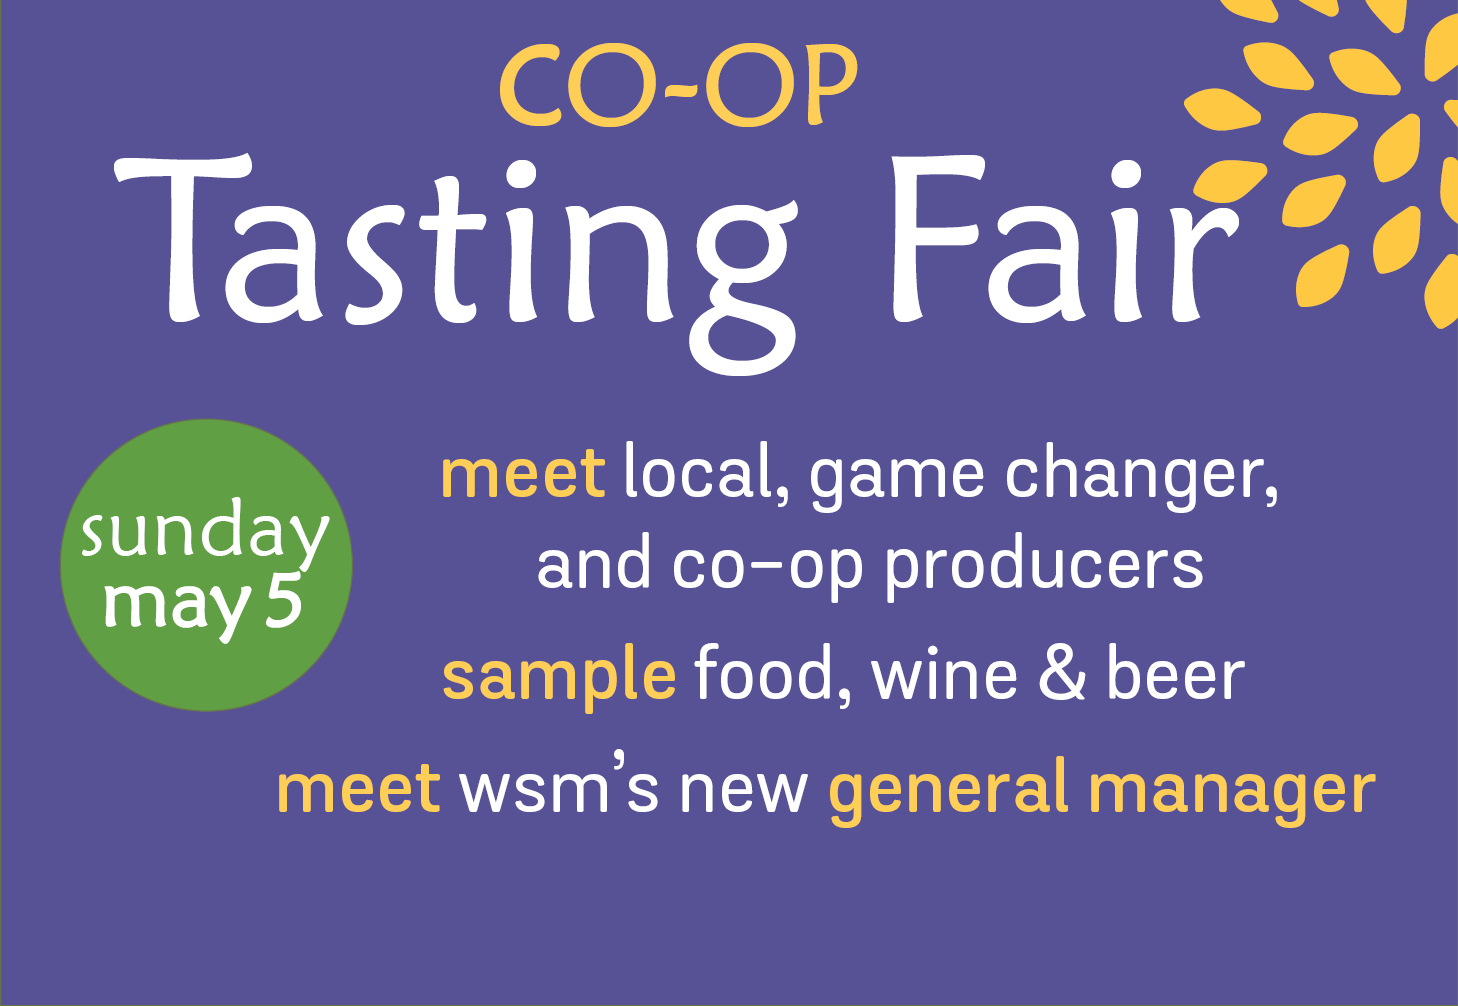 This Sunday: Co-op Tasting Fair